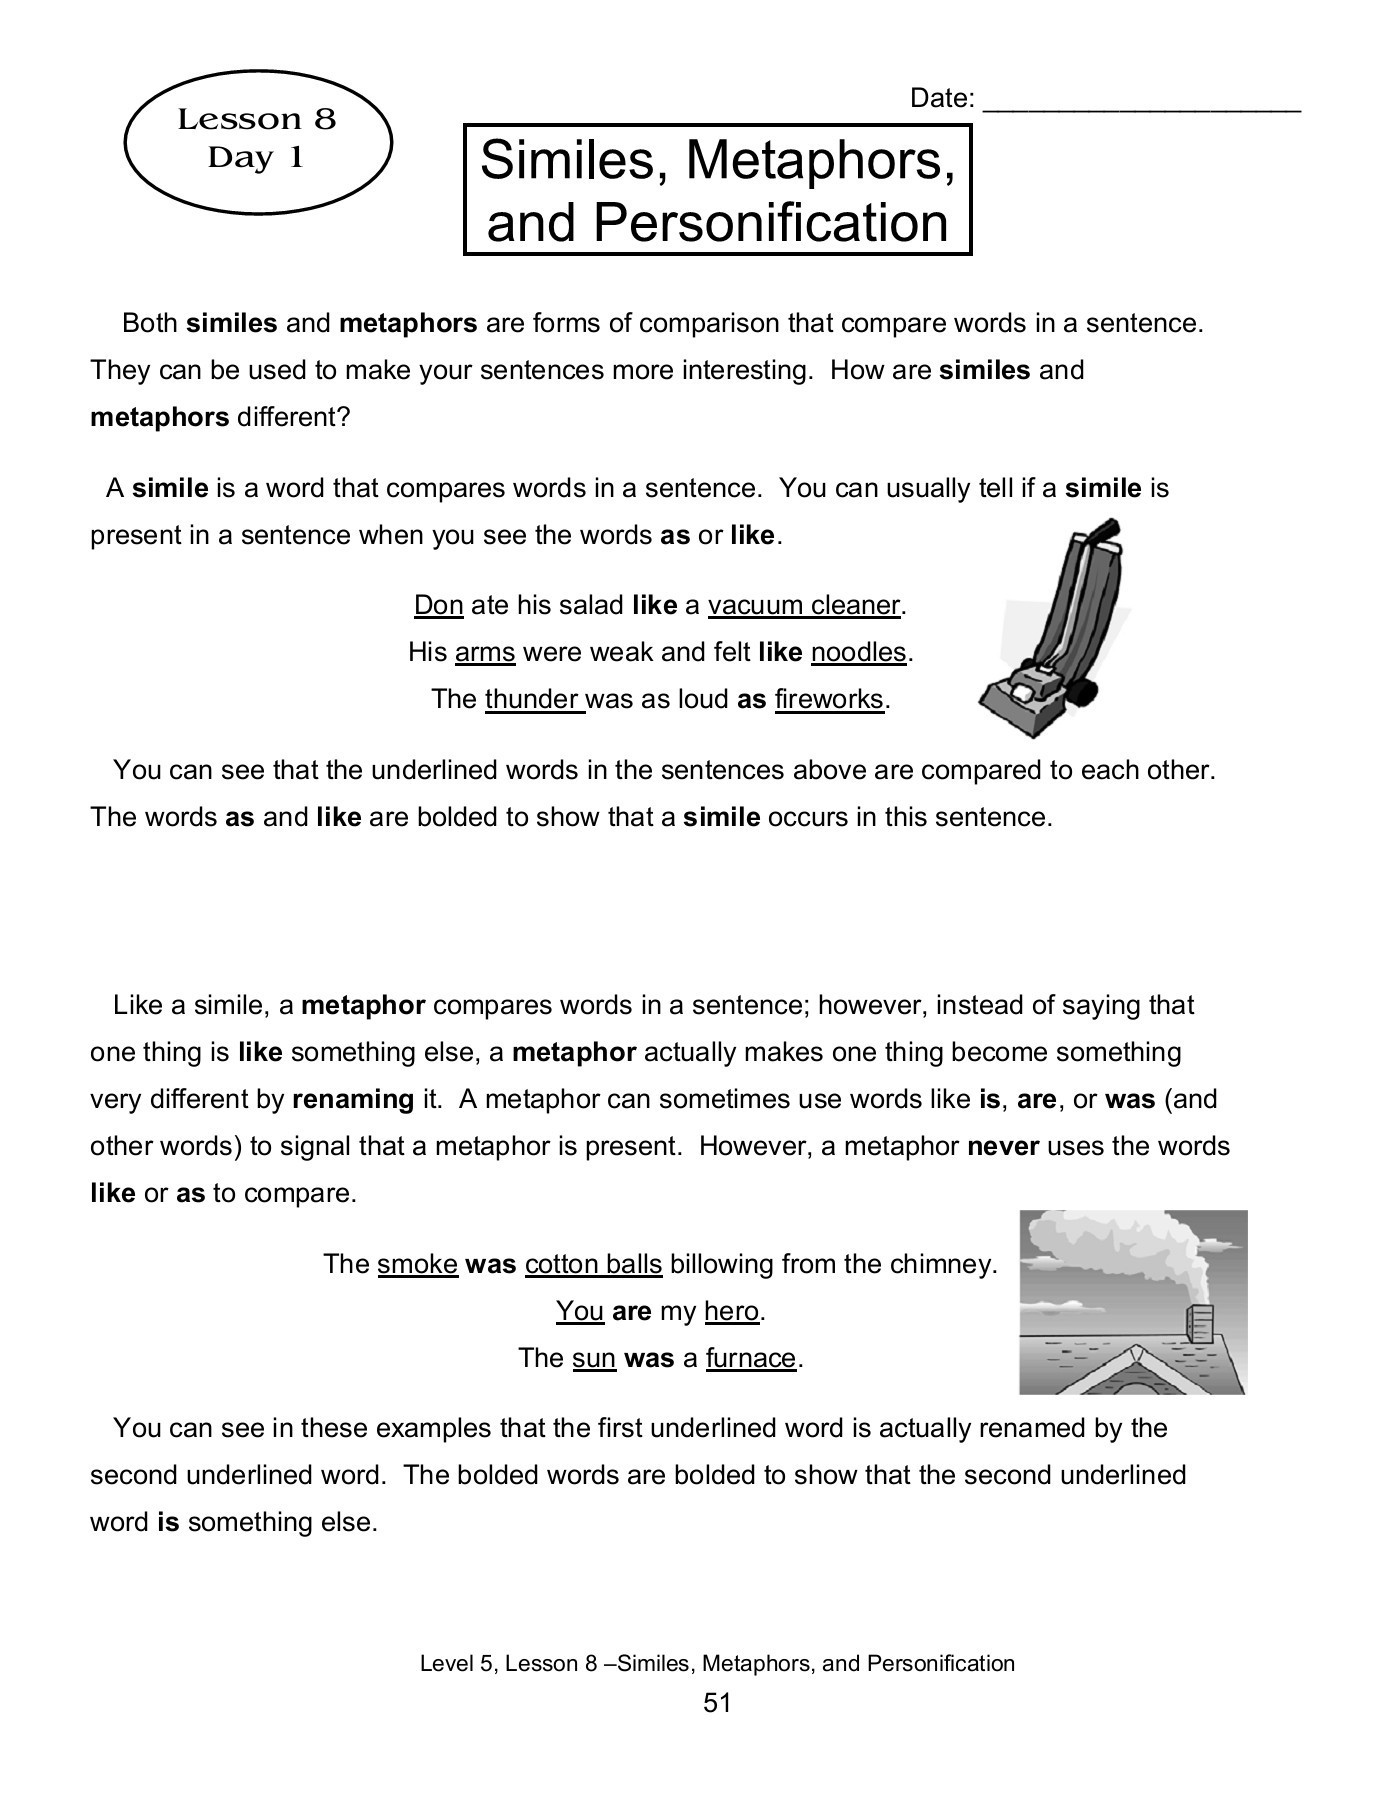 Simile Metaphor Personification Worksheet Lesson 8 Similes Metaphors and Personification Pages 1